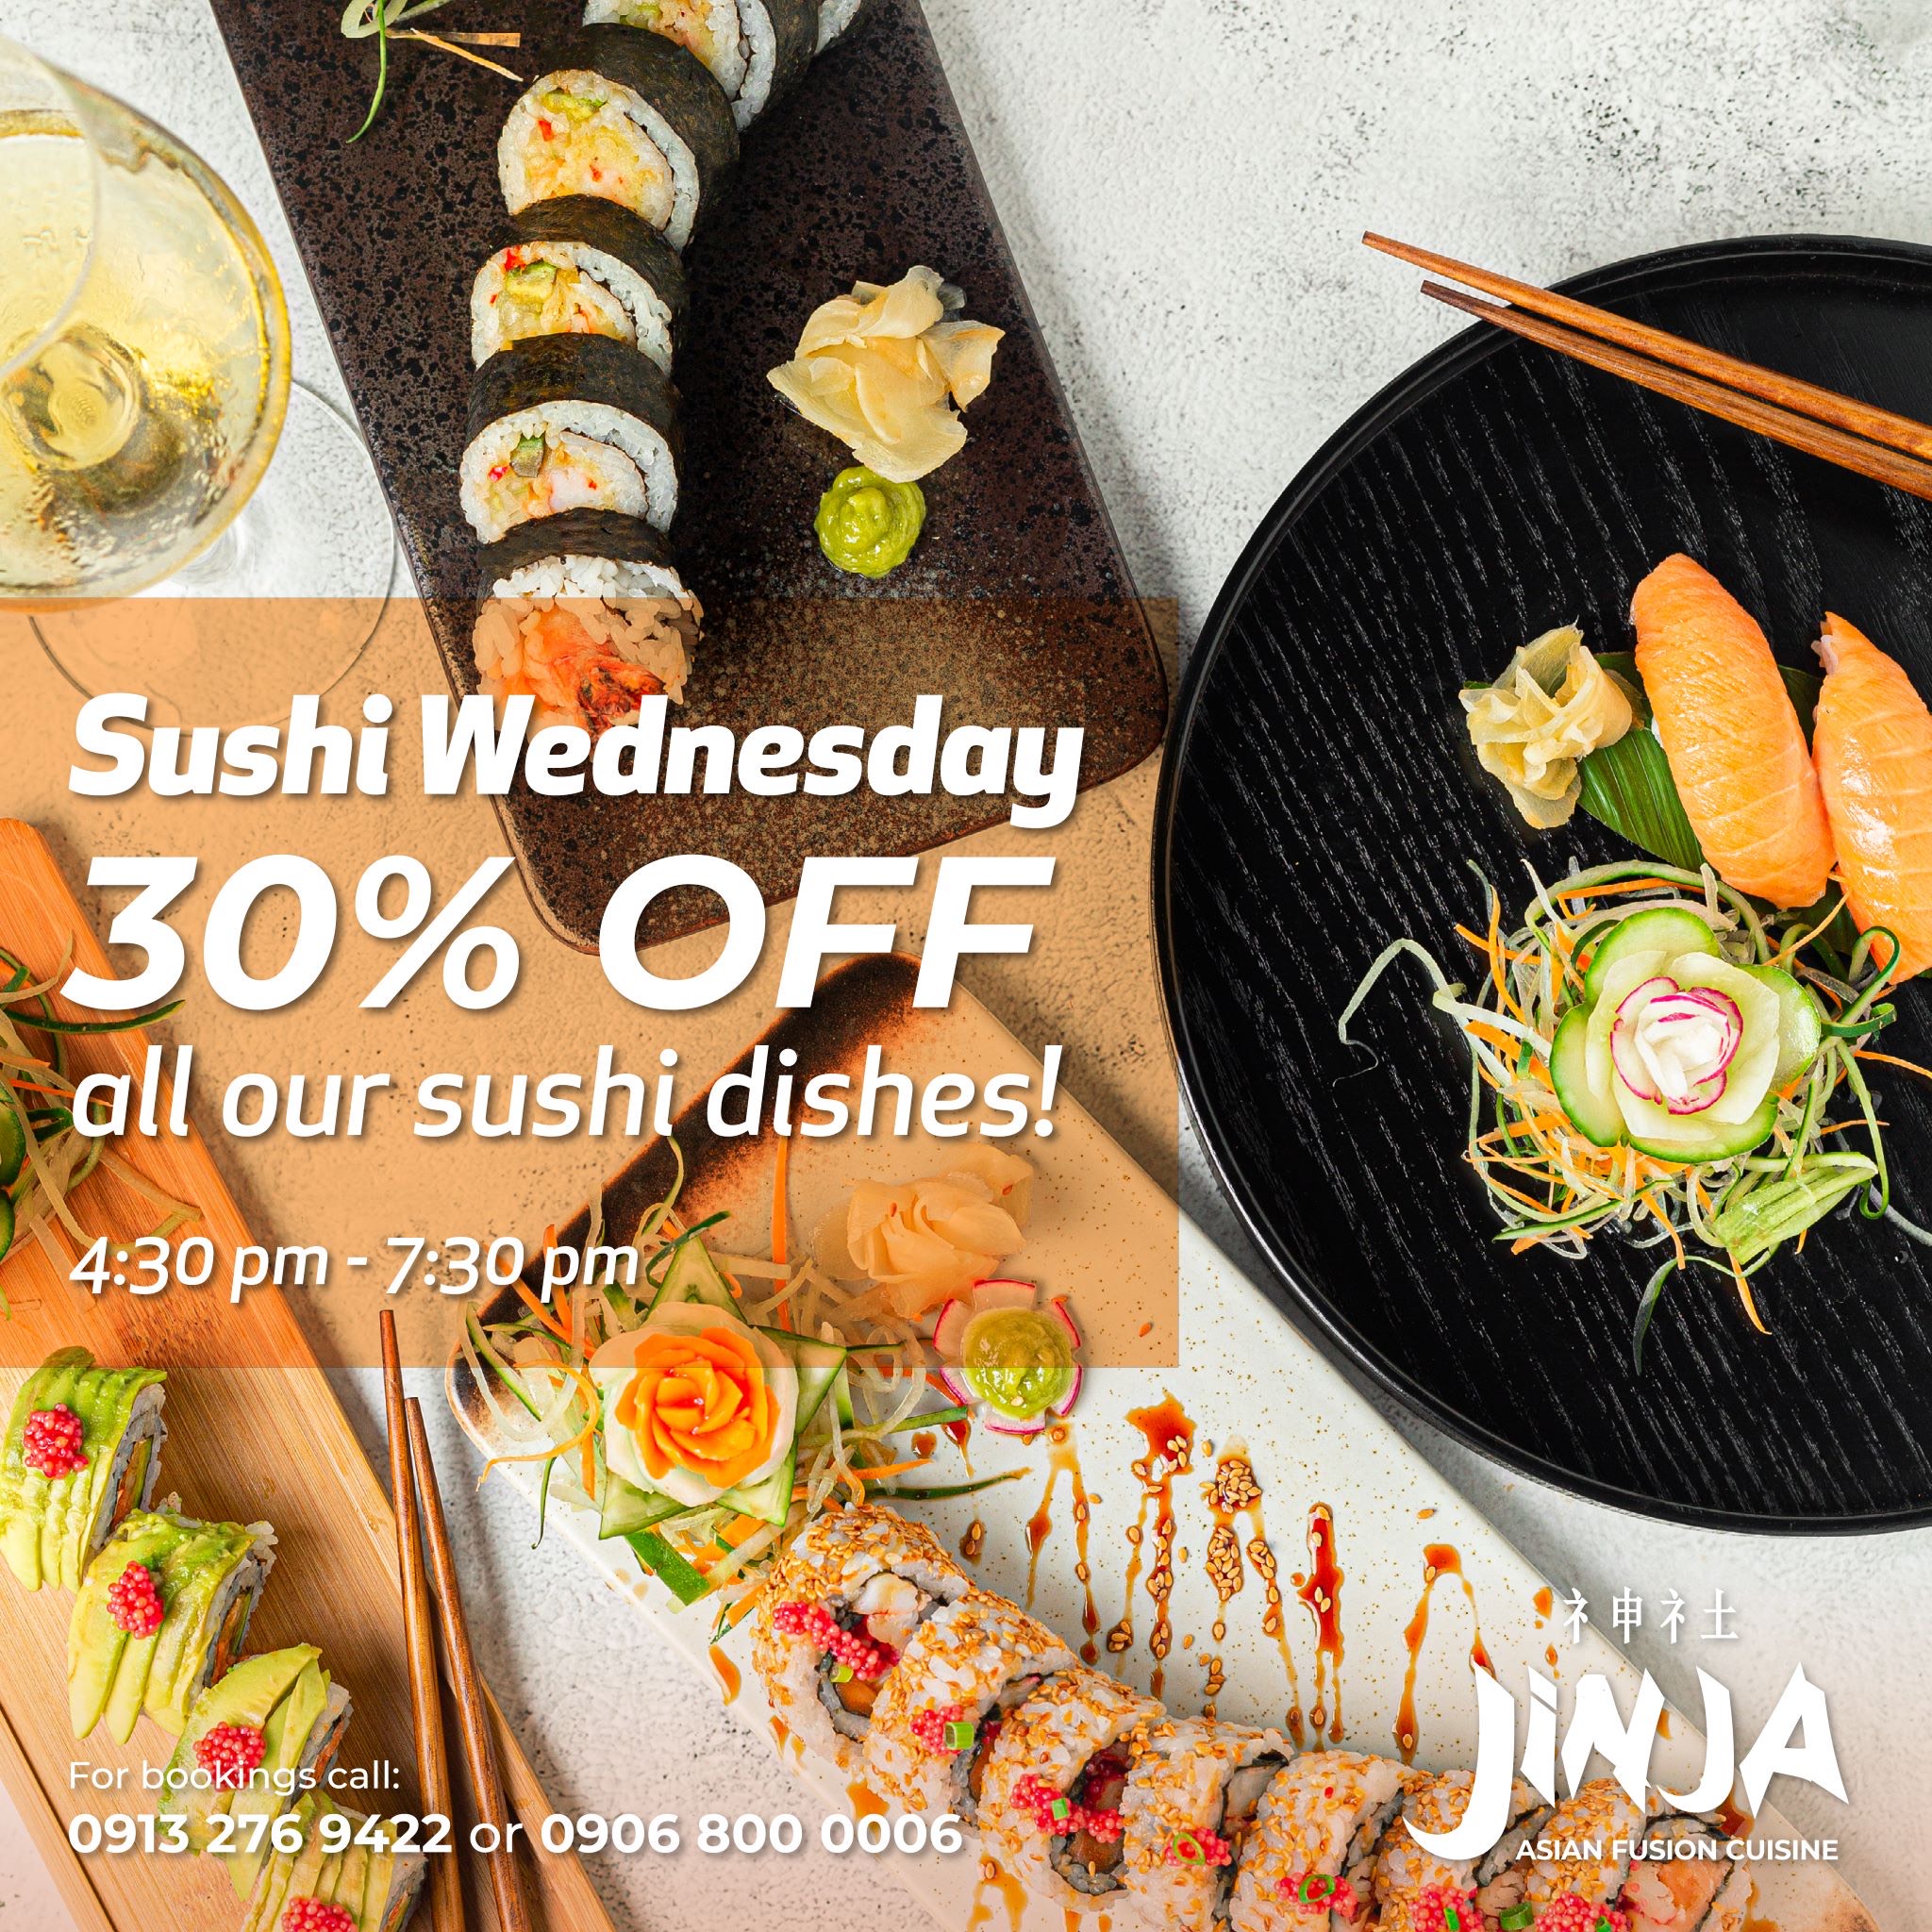 Sushi Wednesday at Jinja restaurant